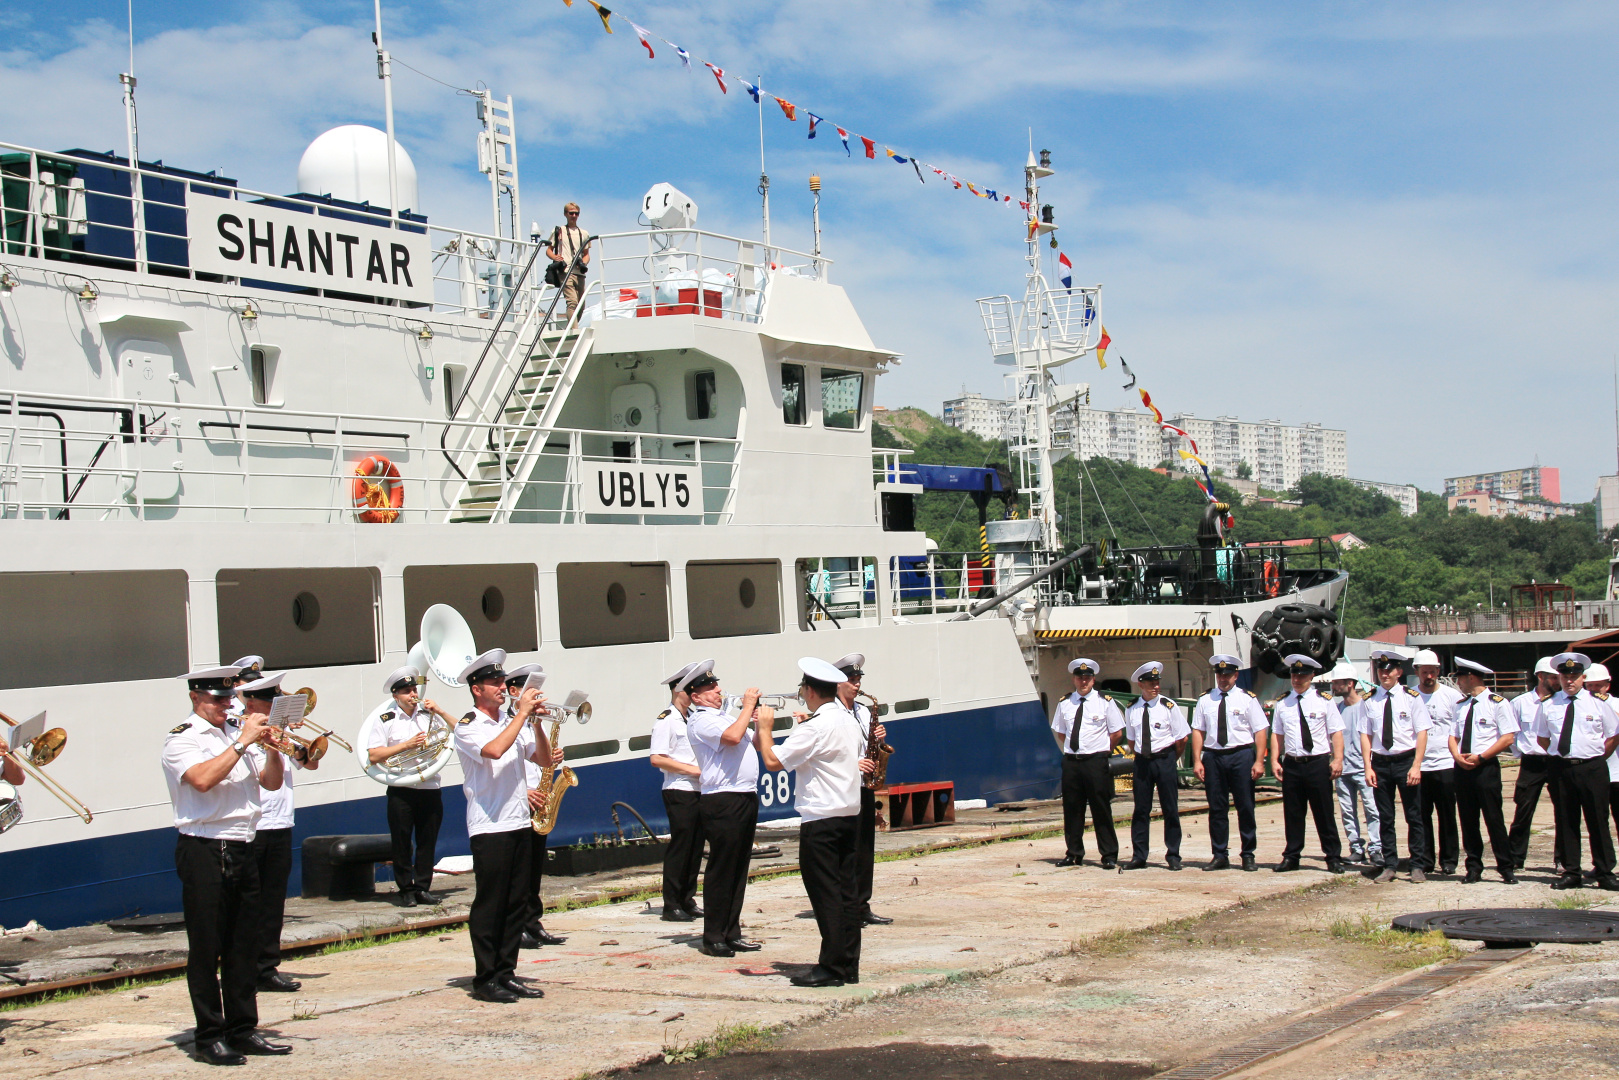 Класс РС: на рыболовном судне «Шантар» поднят флаг